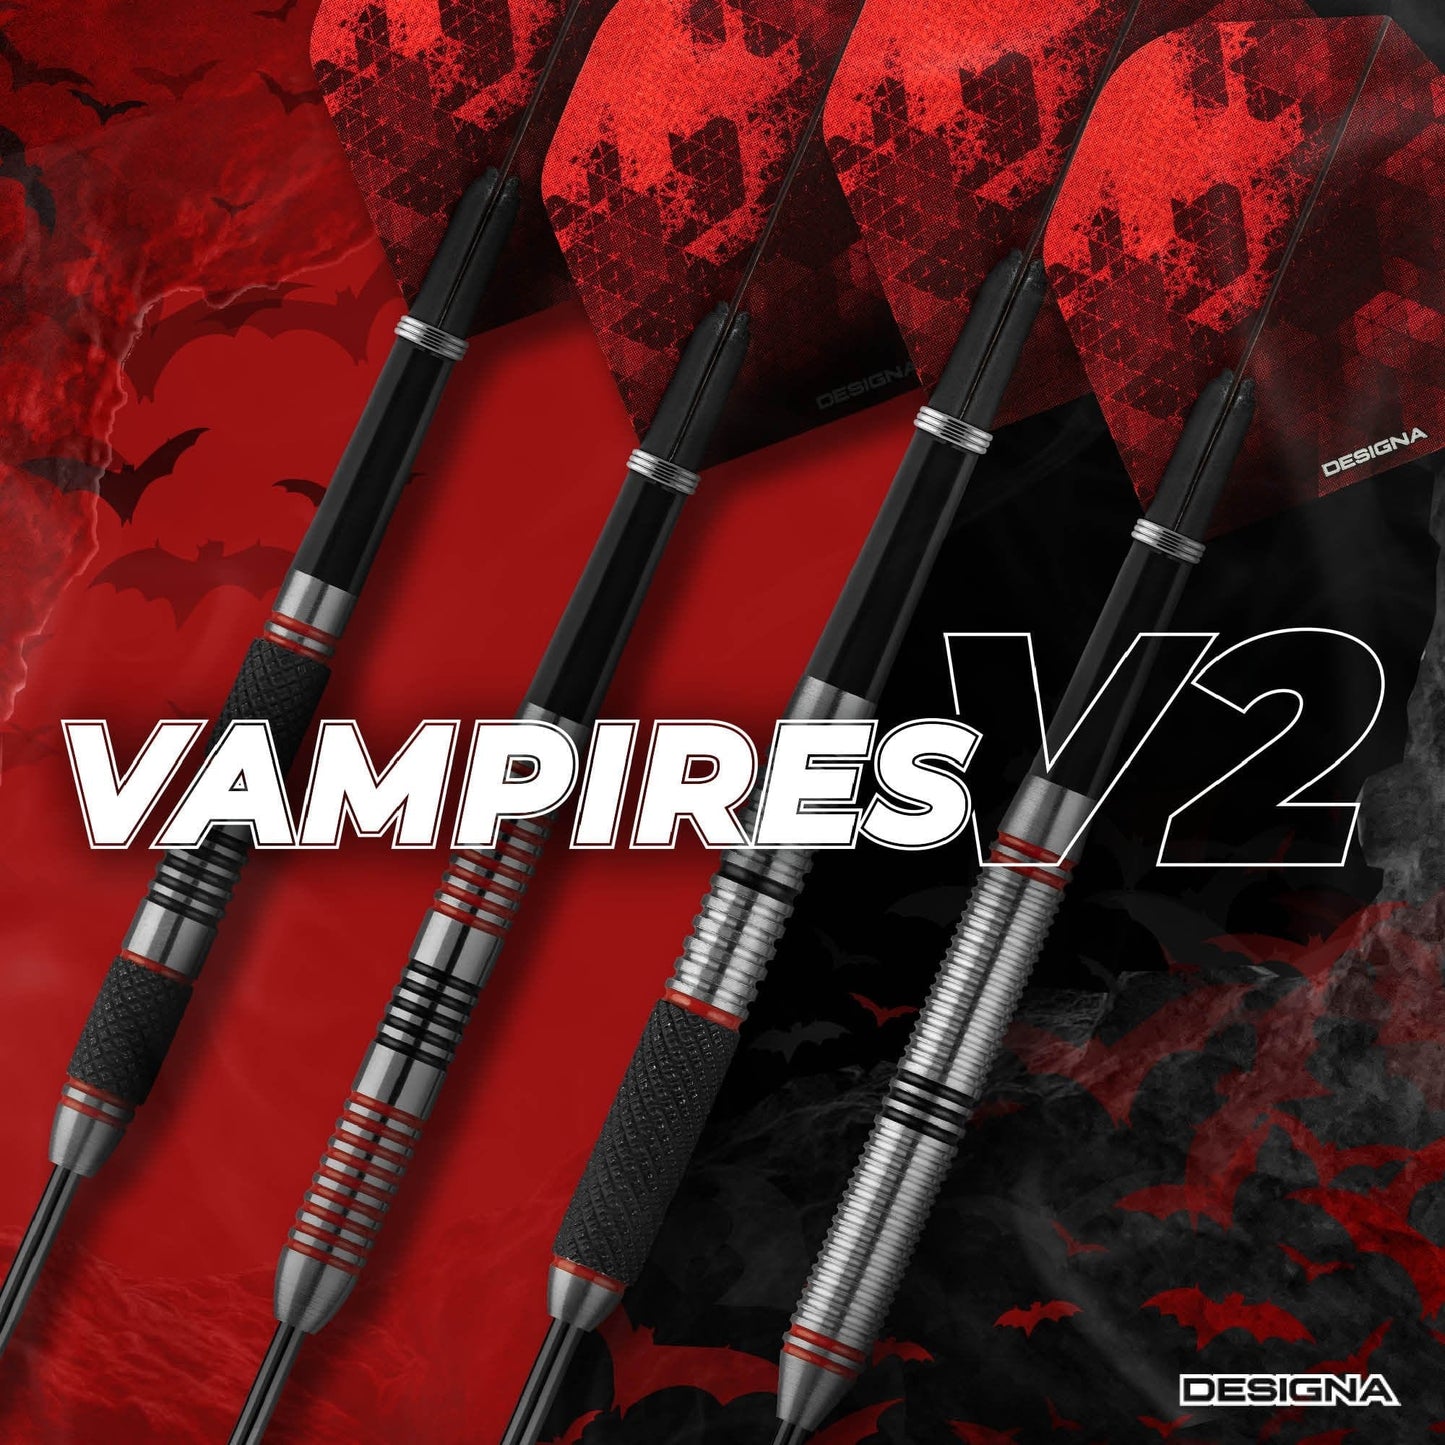 Designa Vampires V2 Darts - Soft Tip - M2 19g